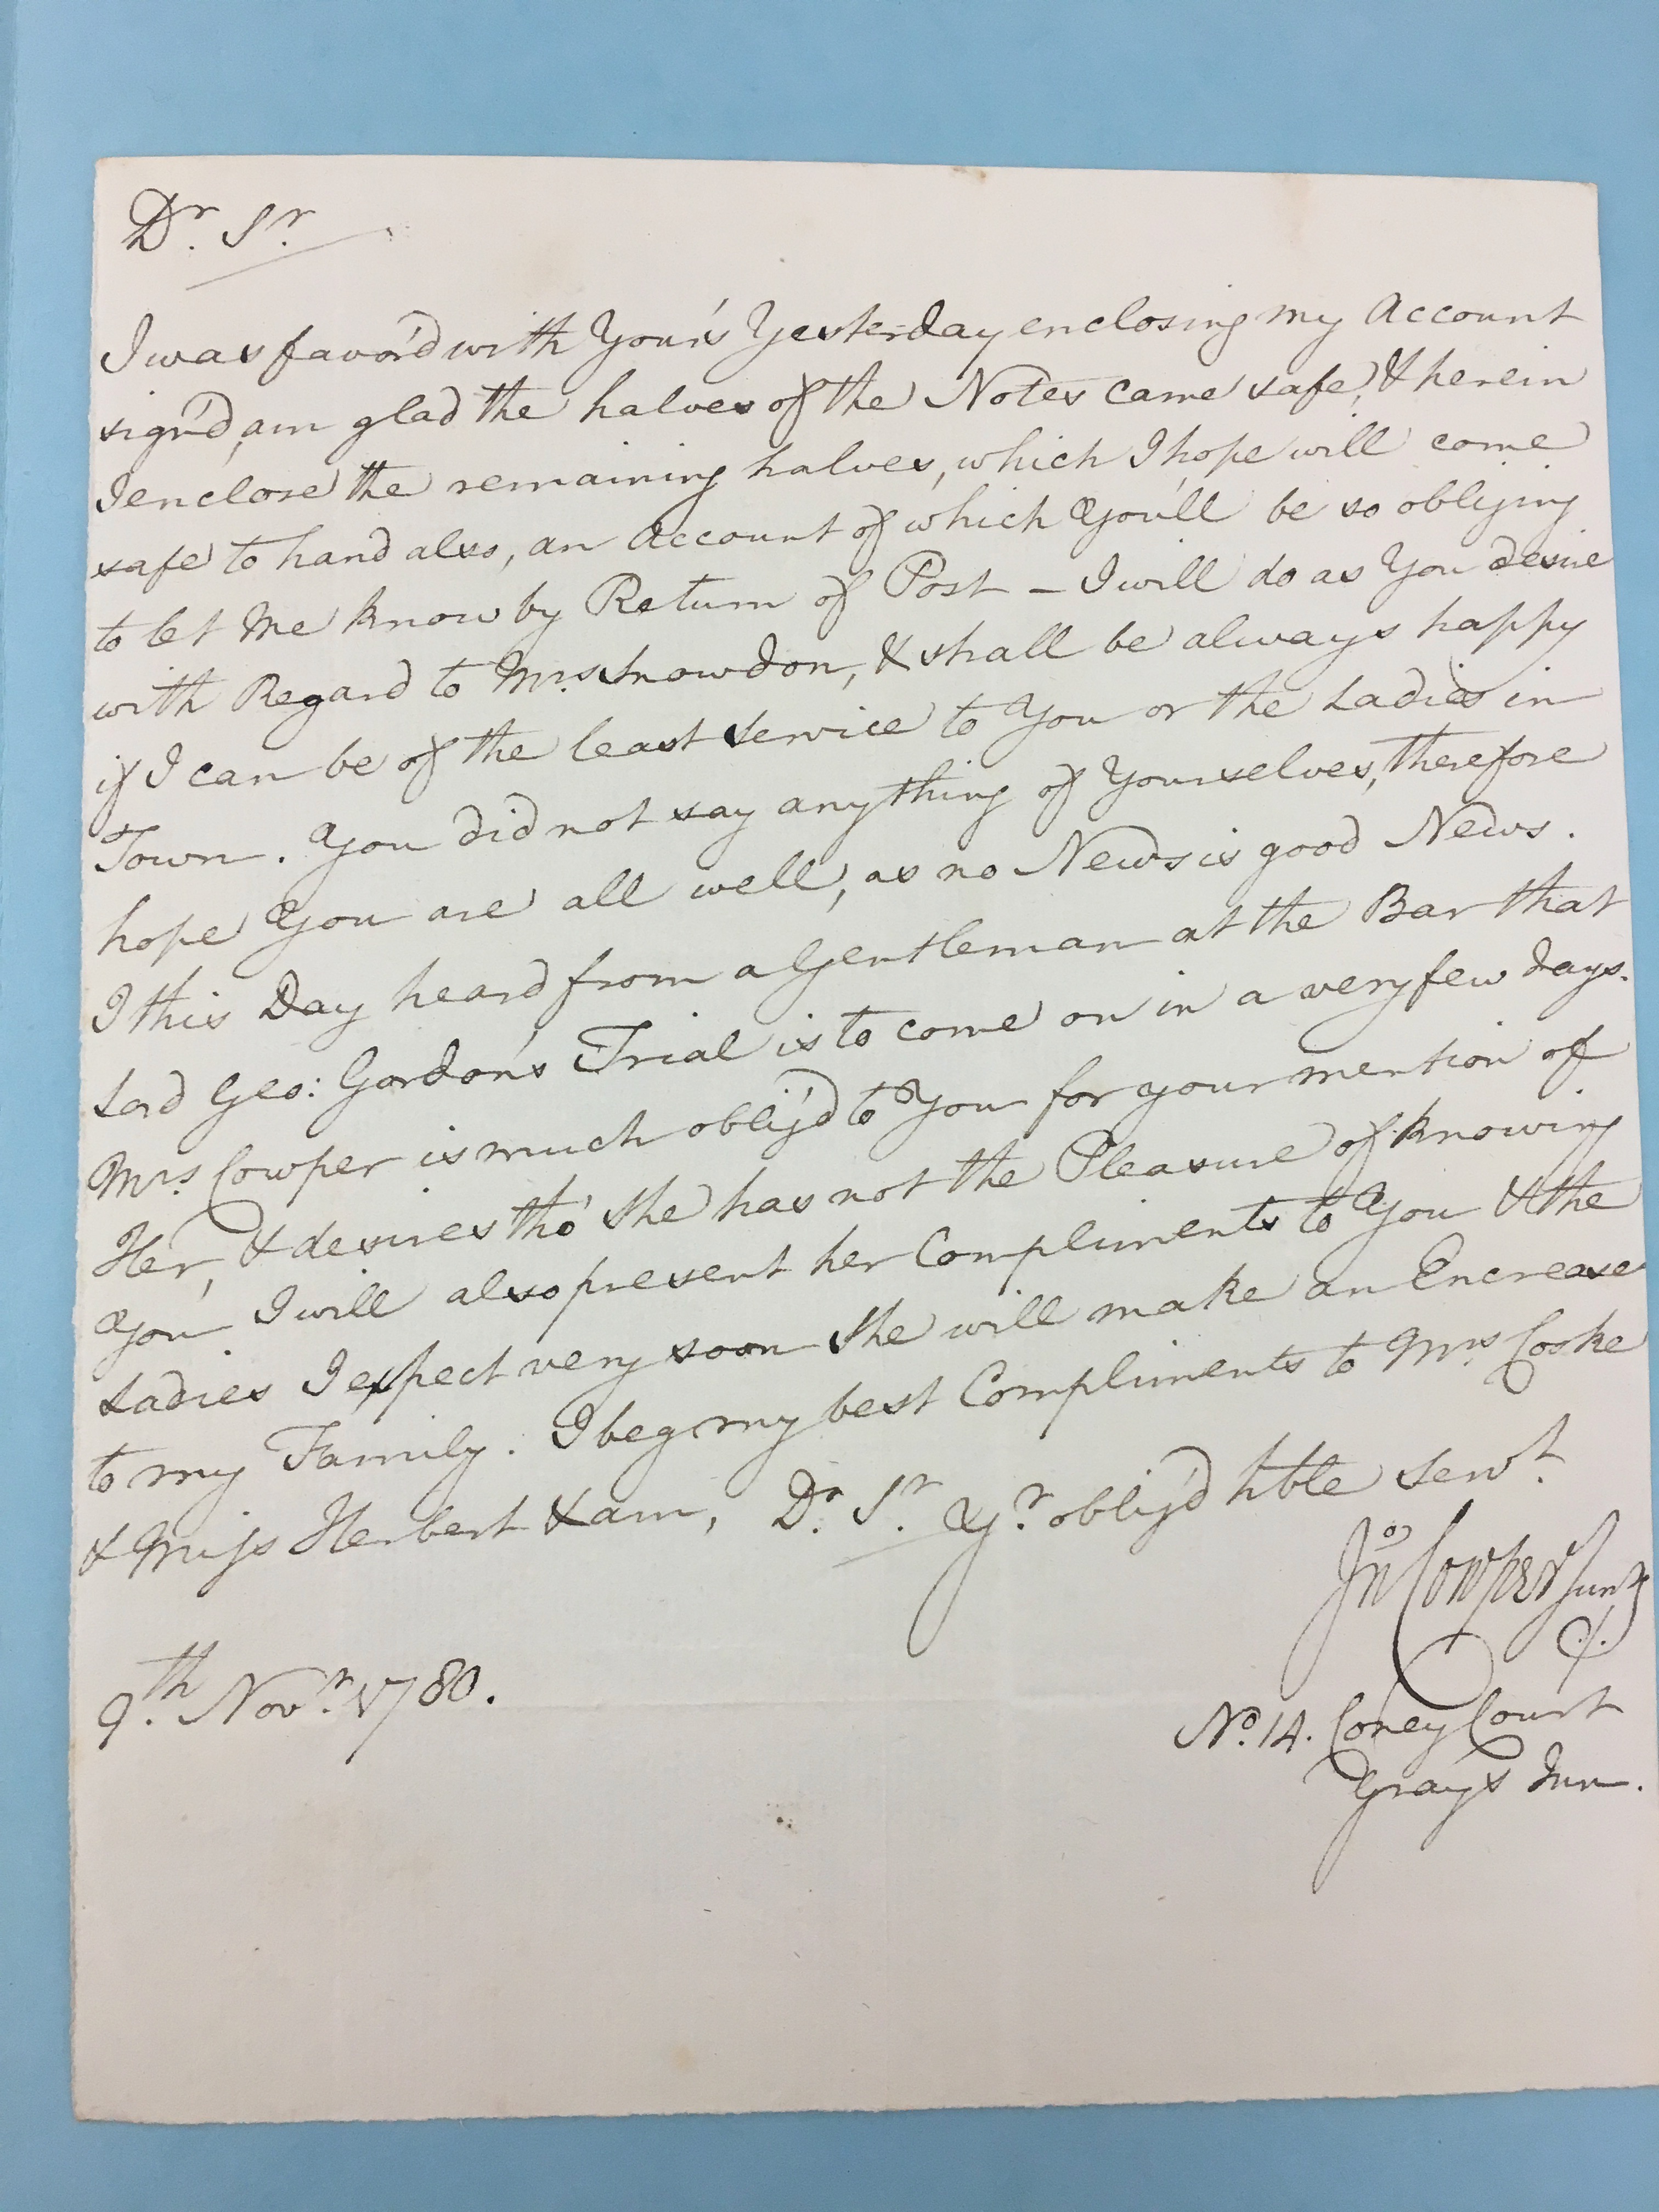 Image #1 of letter: John Cowper to Thomas Cooke, 9 November 1780